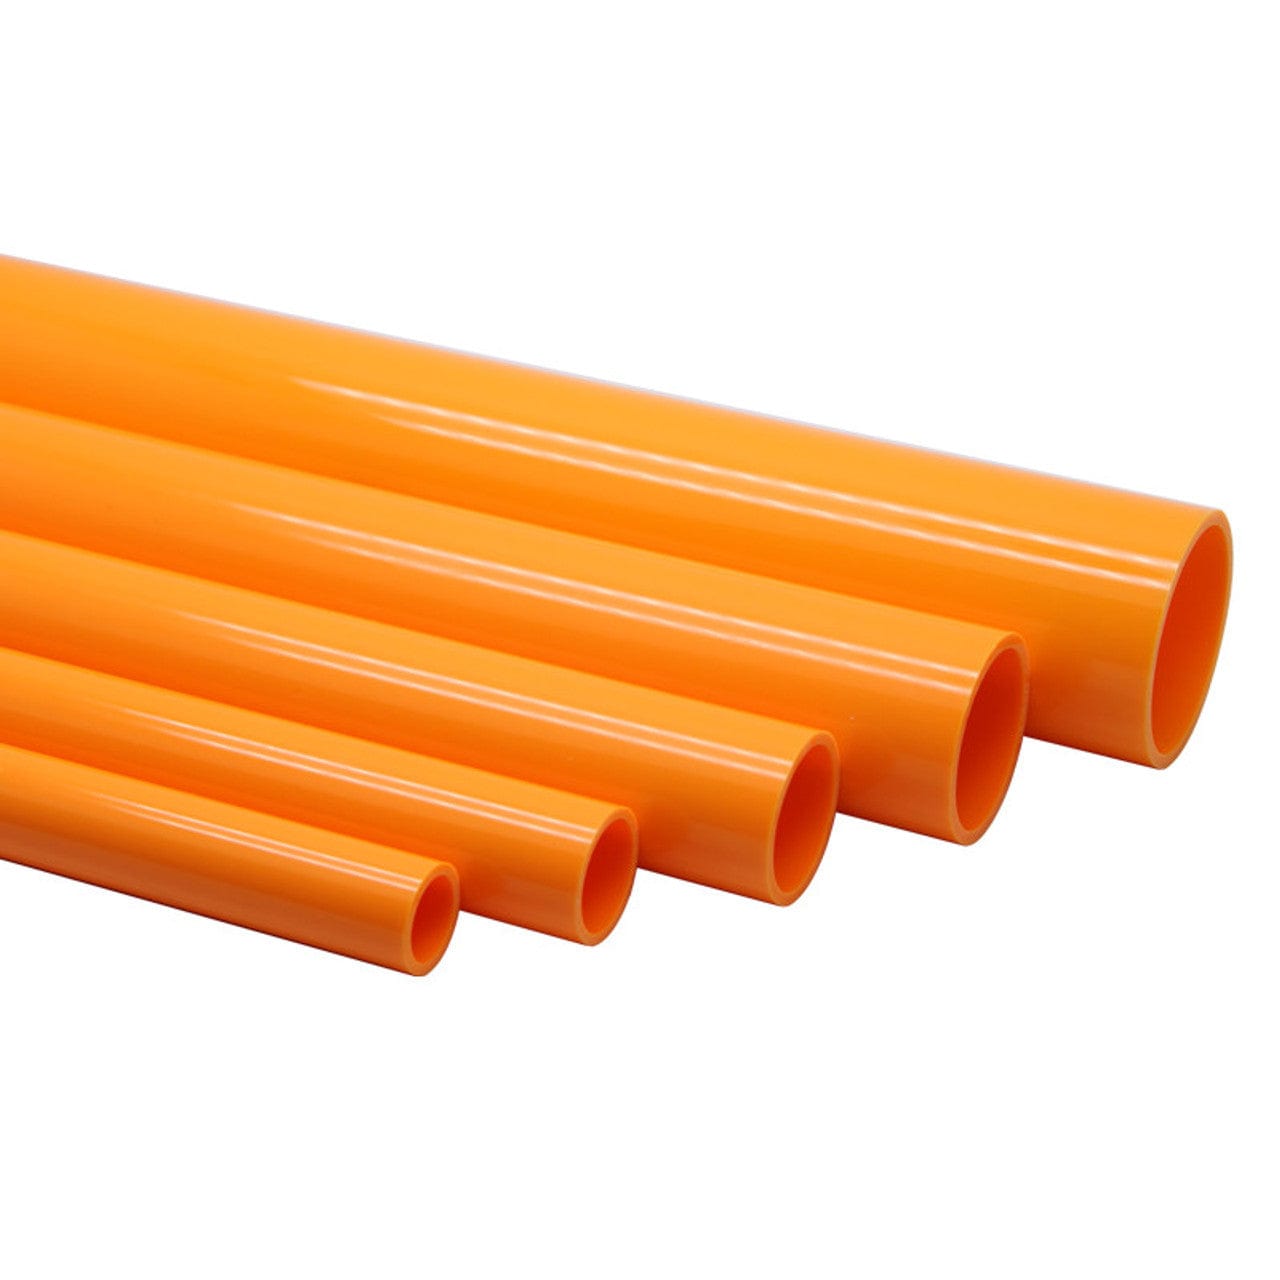 Orange DIN UPVC Pipe 0.5m Lengths - Sanking